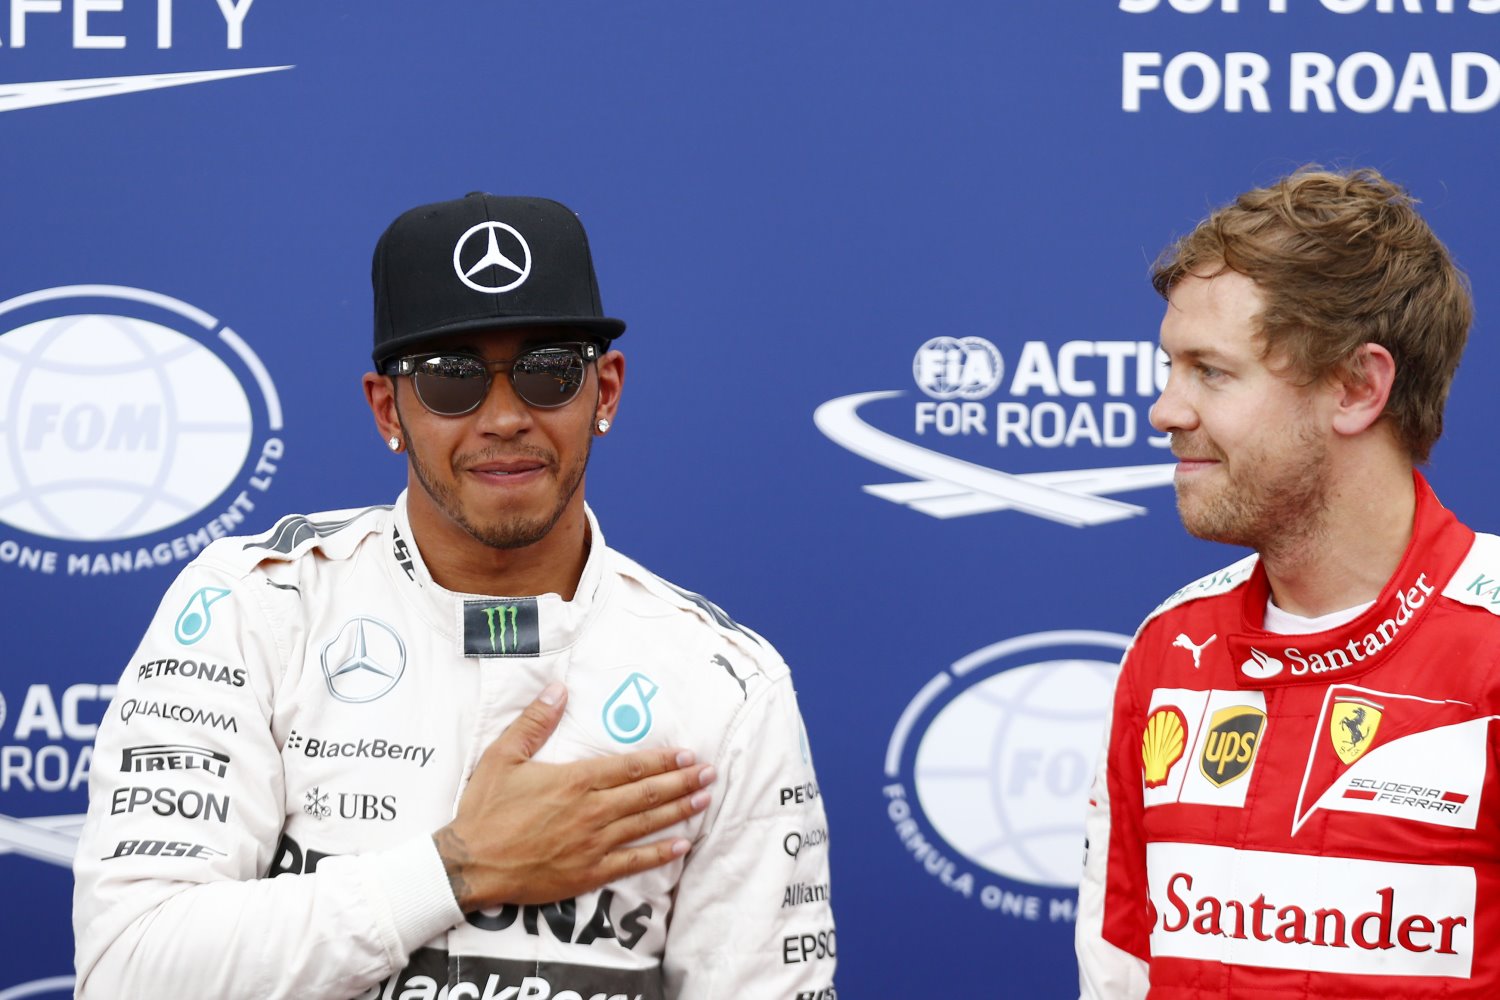 Hamilton and Vettel enjoy the moment